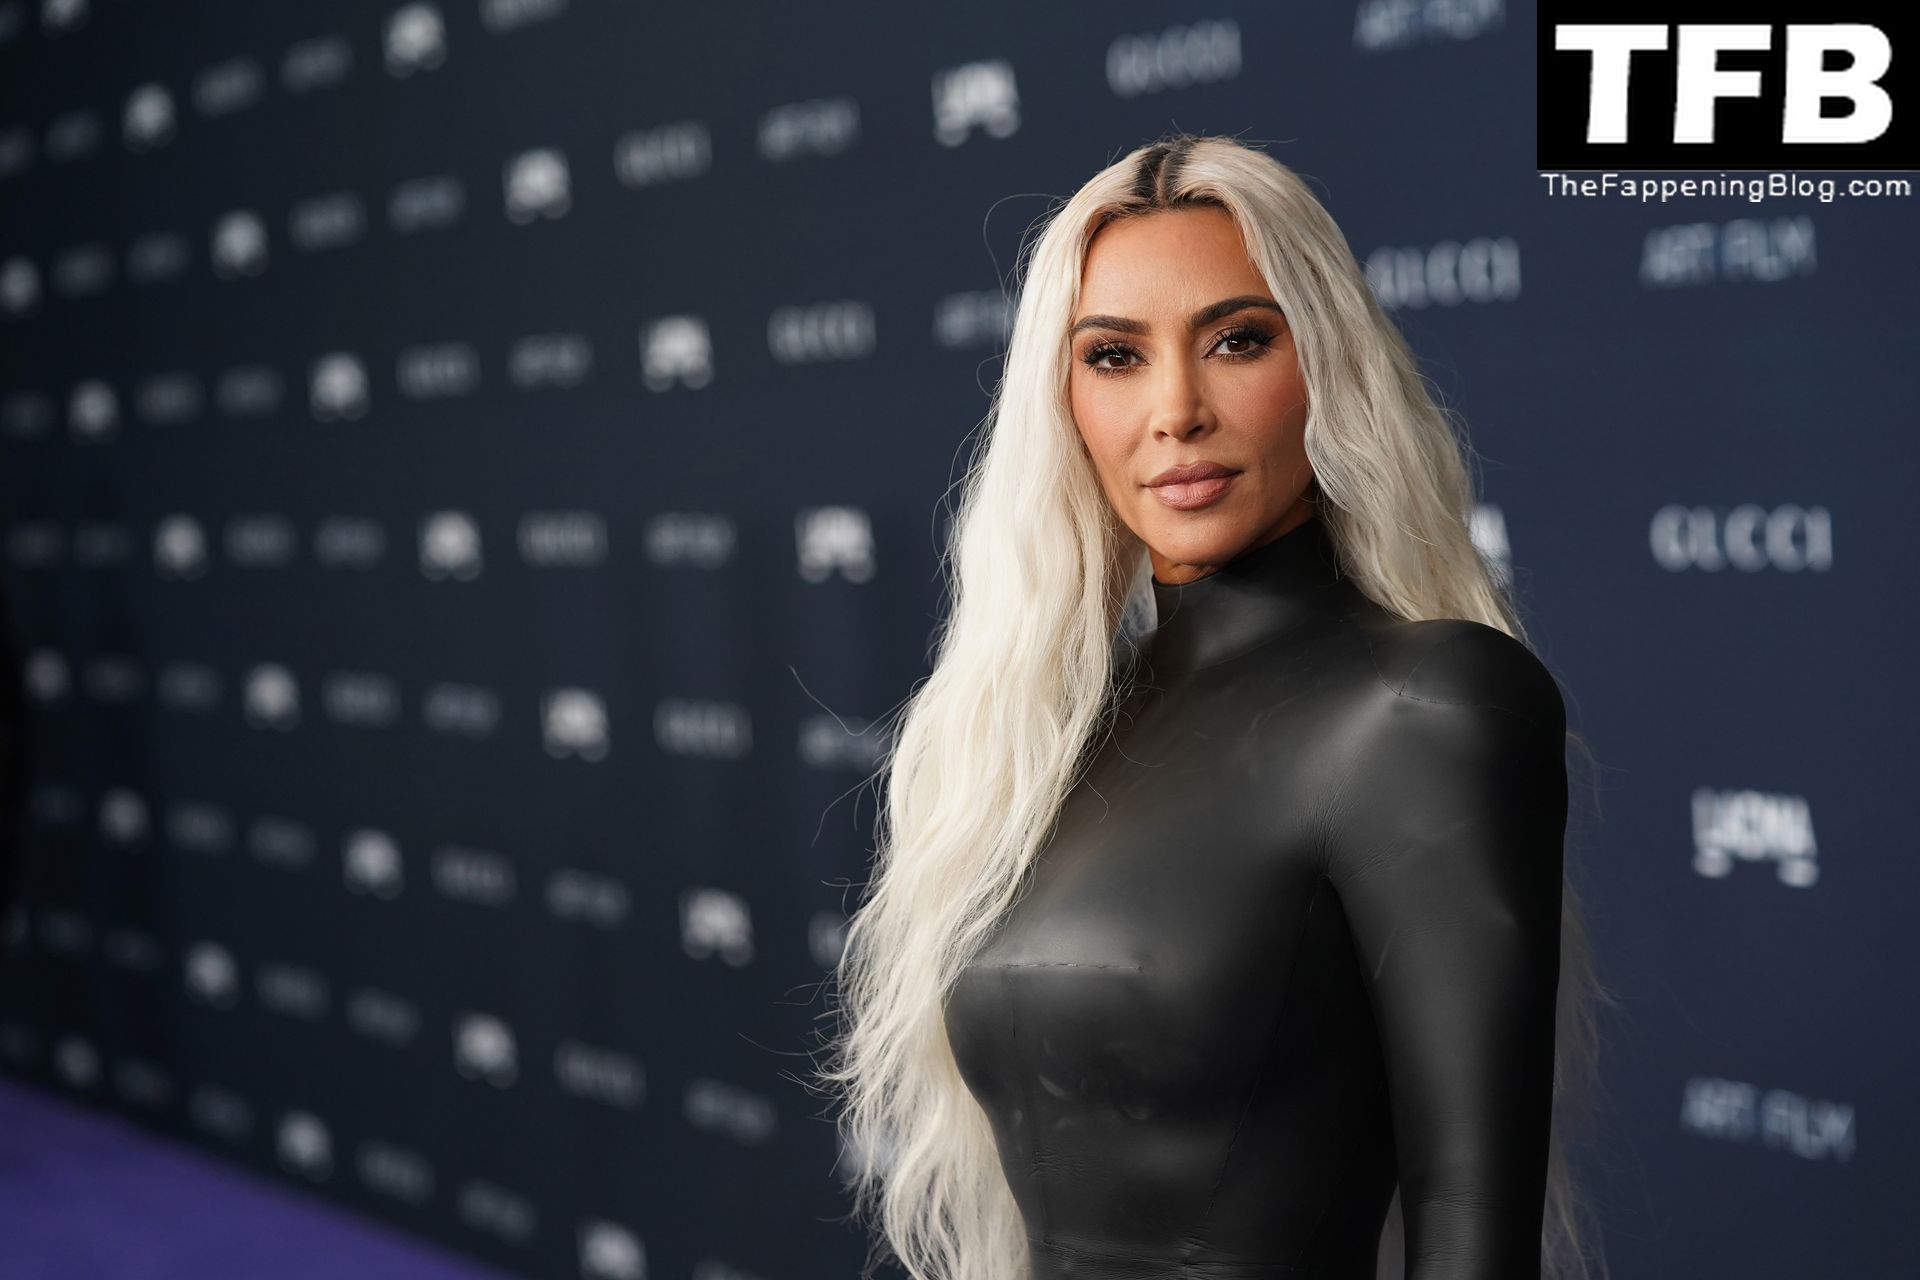 Kim Kardashian Looks Hot in Black at the 11th Annual LACMA Art and Film Gala (45 Photos)